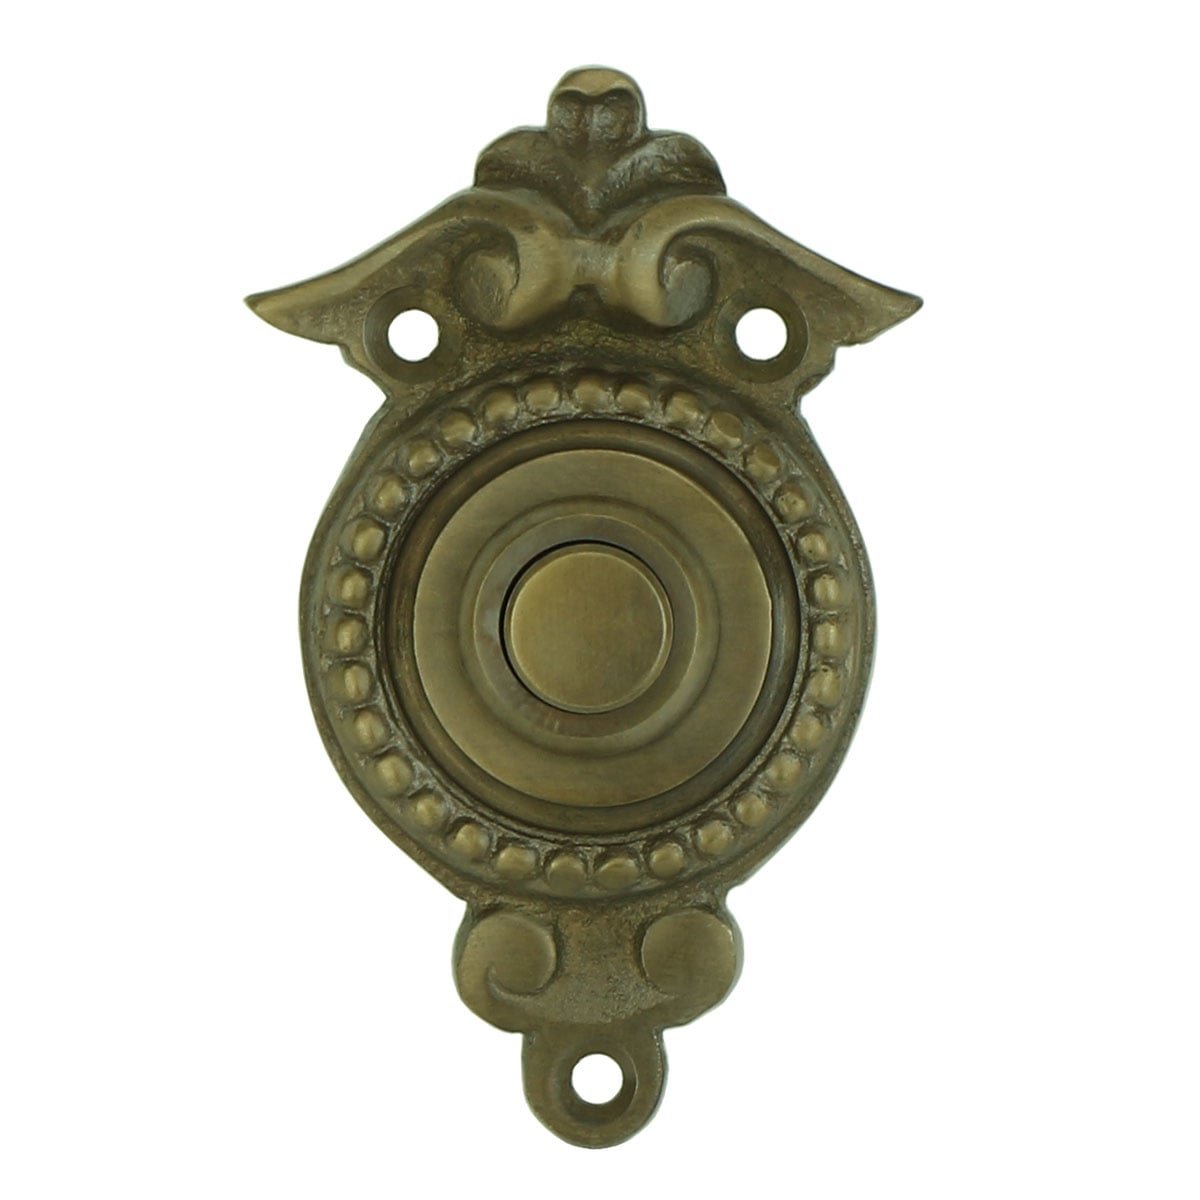 Türklingel monumental bronze Stößen - 78 mm